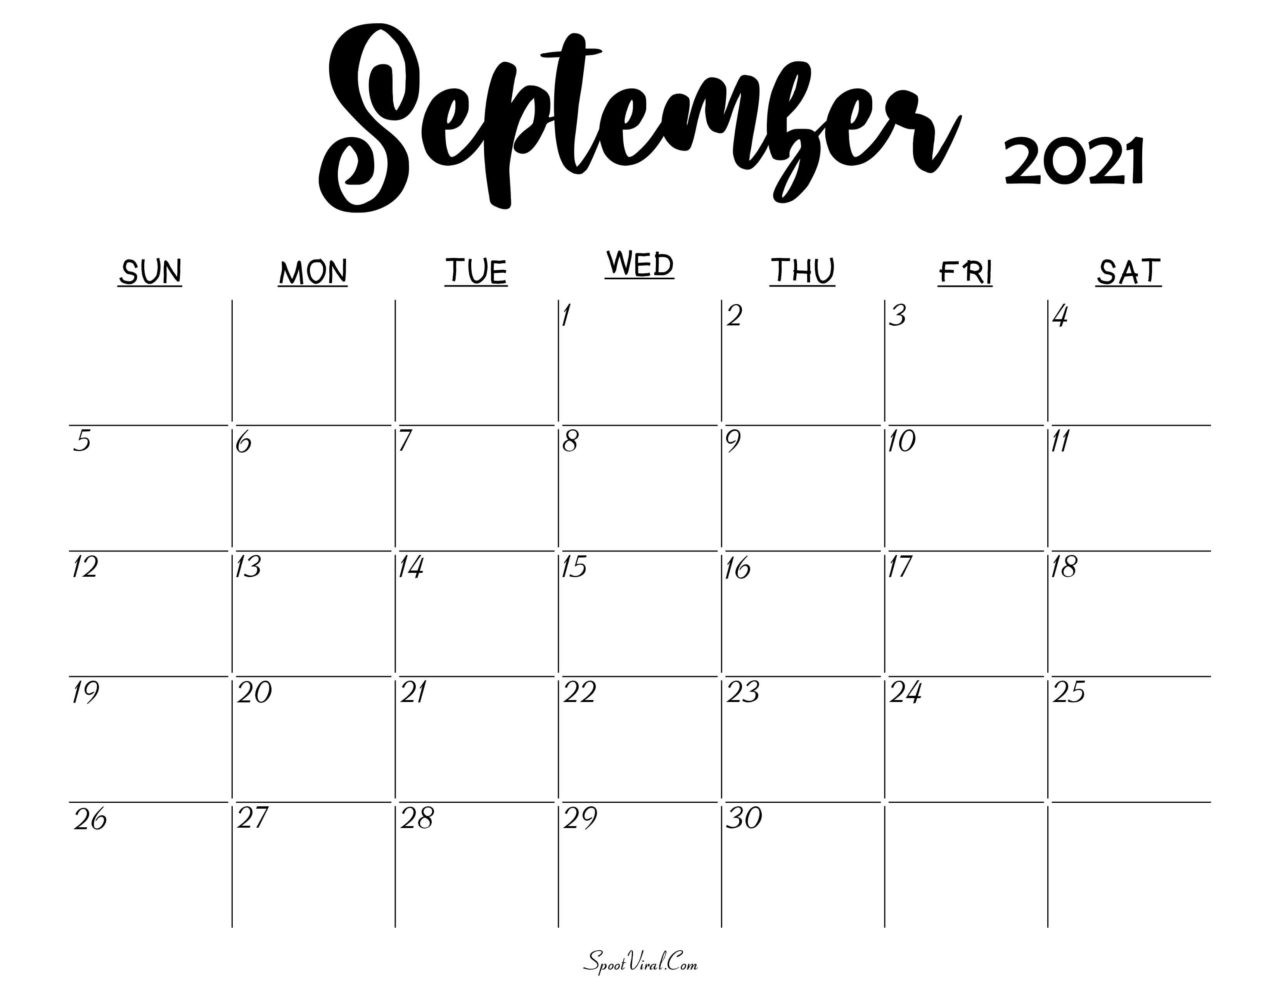 Blank September 2021 Calendar Printable - Latest Calendar-List Of Festivals 2021 To Print Out